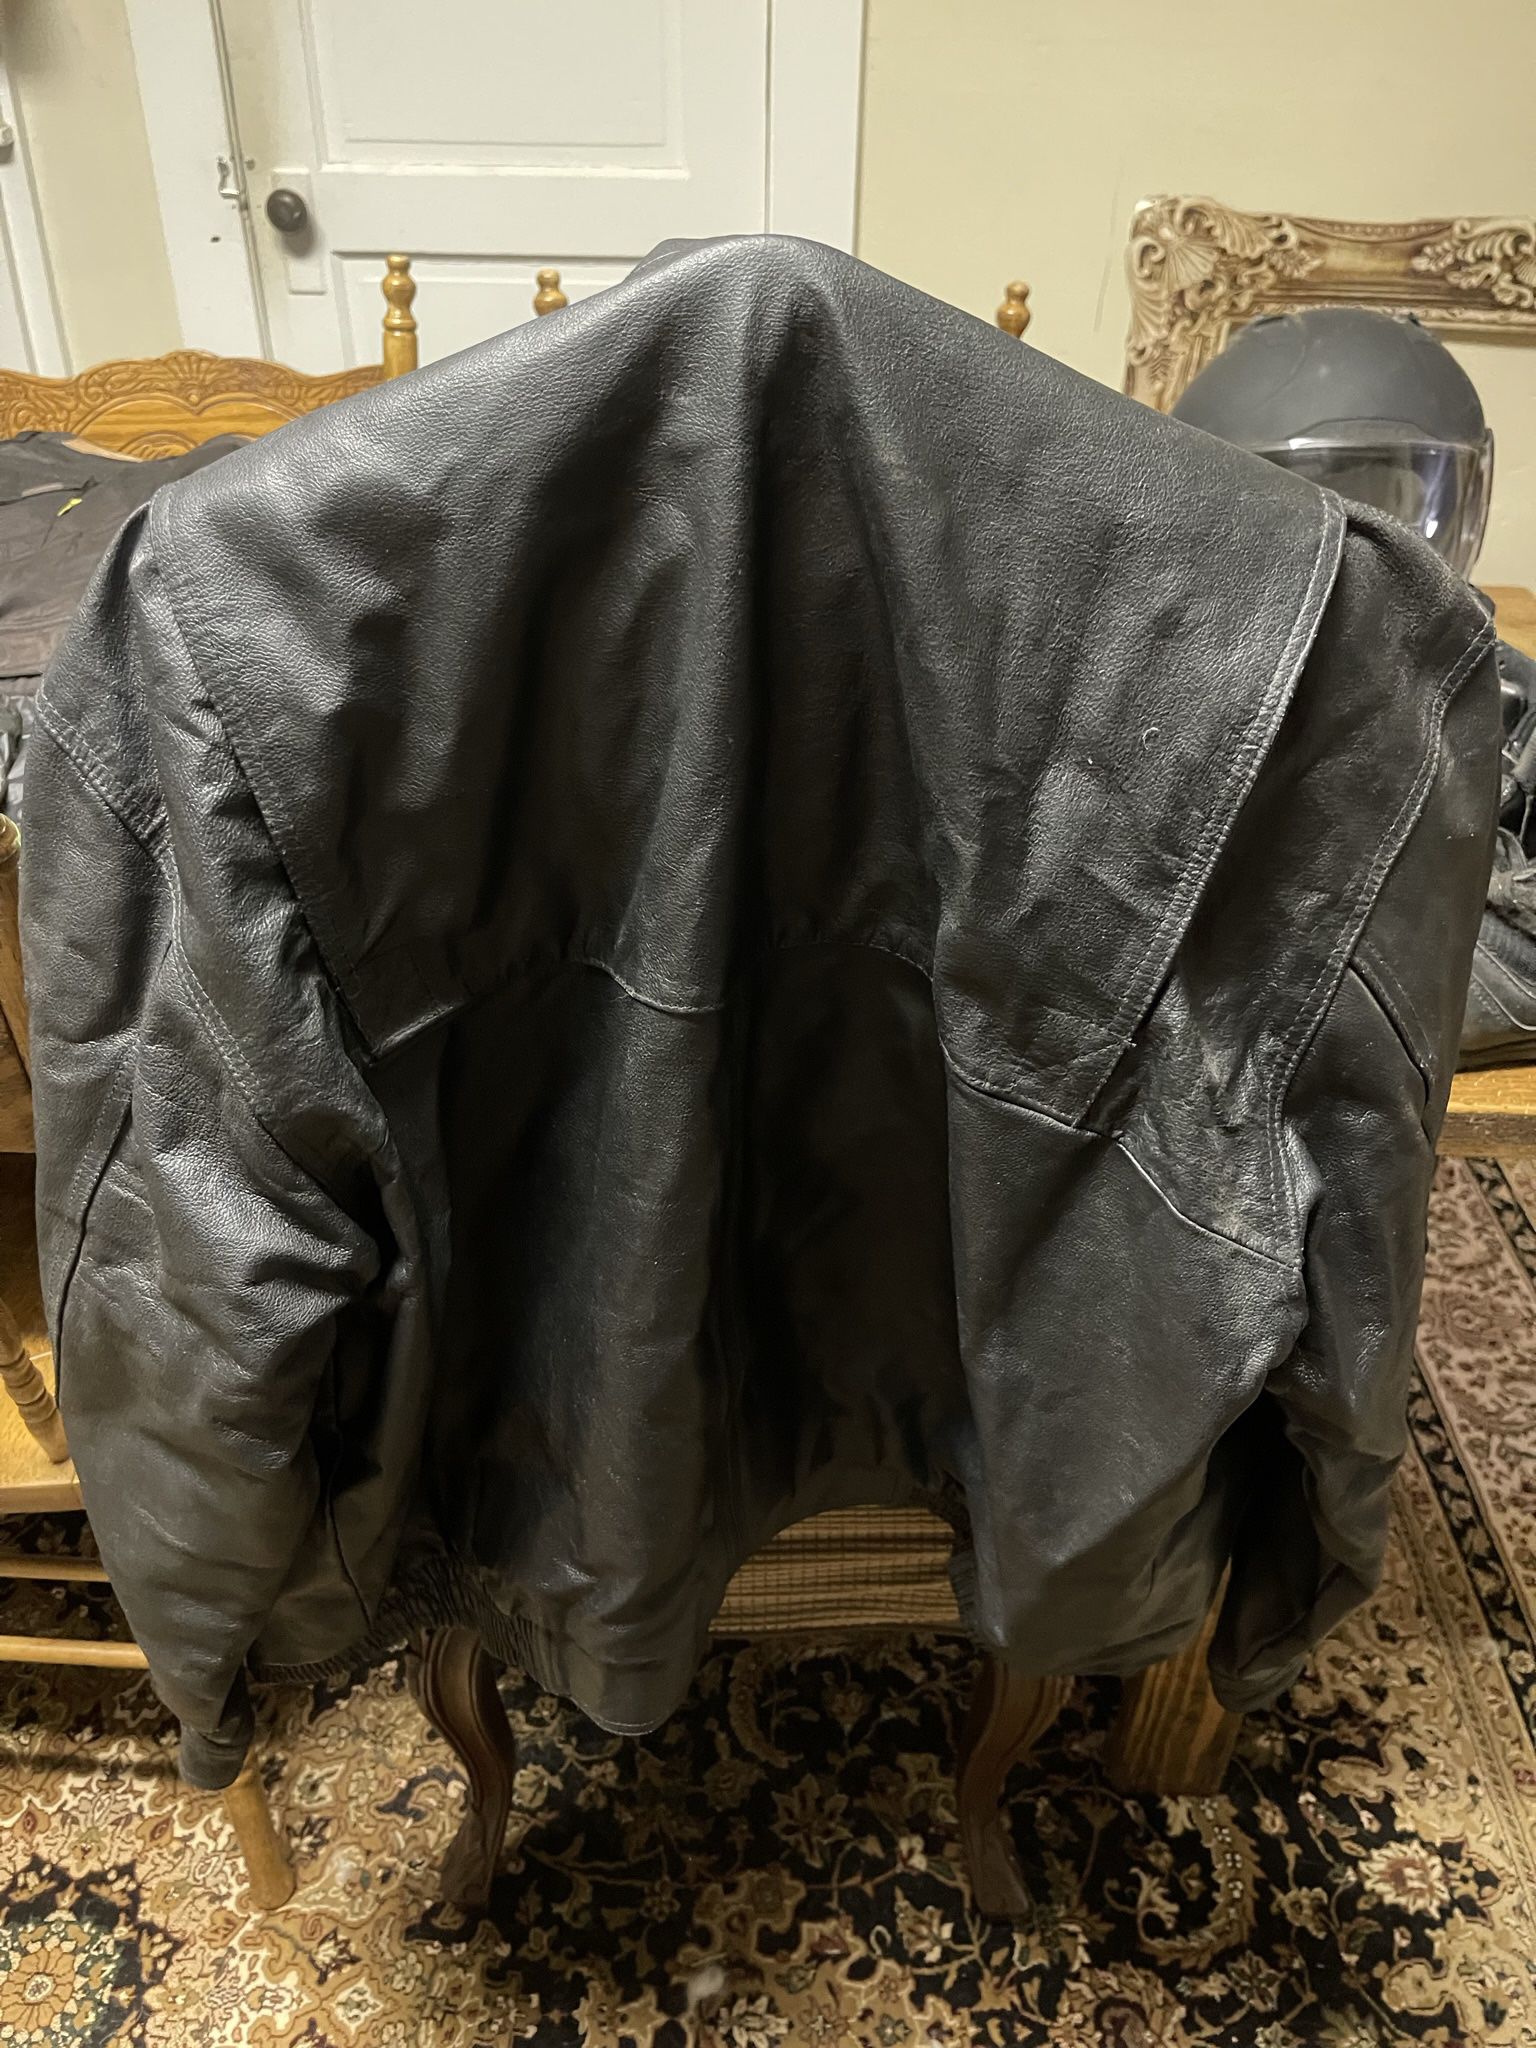 Men’s 2XL Leather Jacket